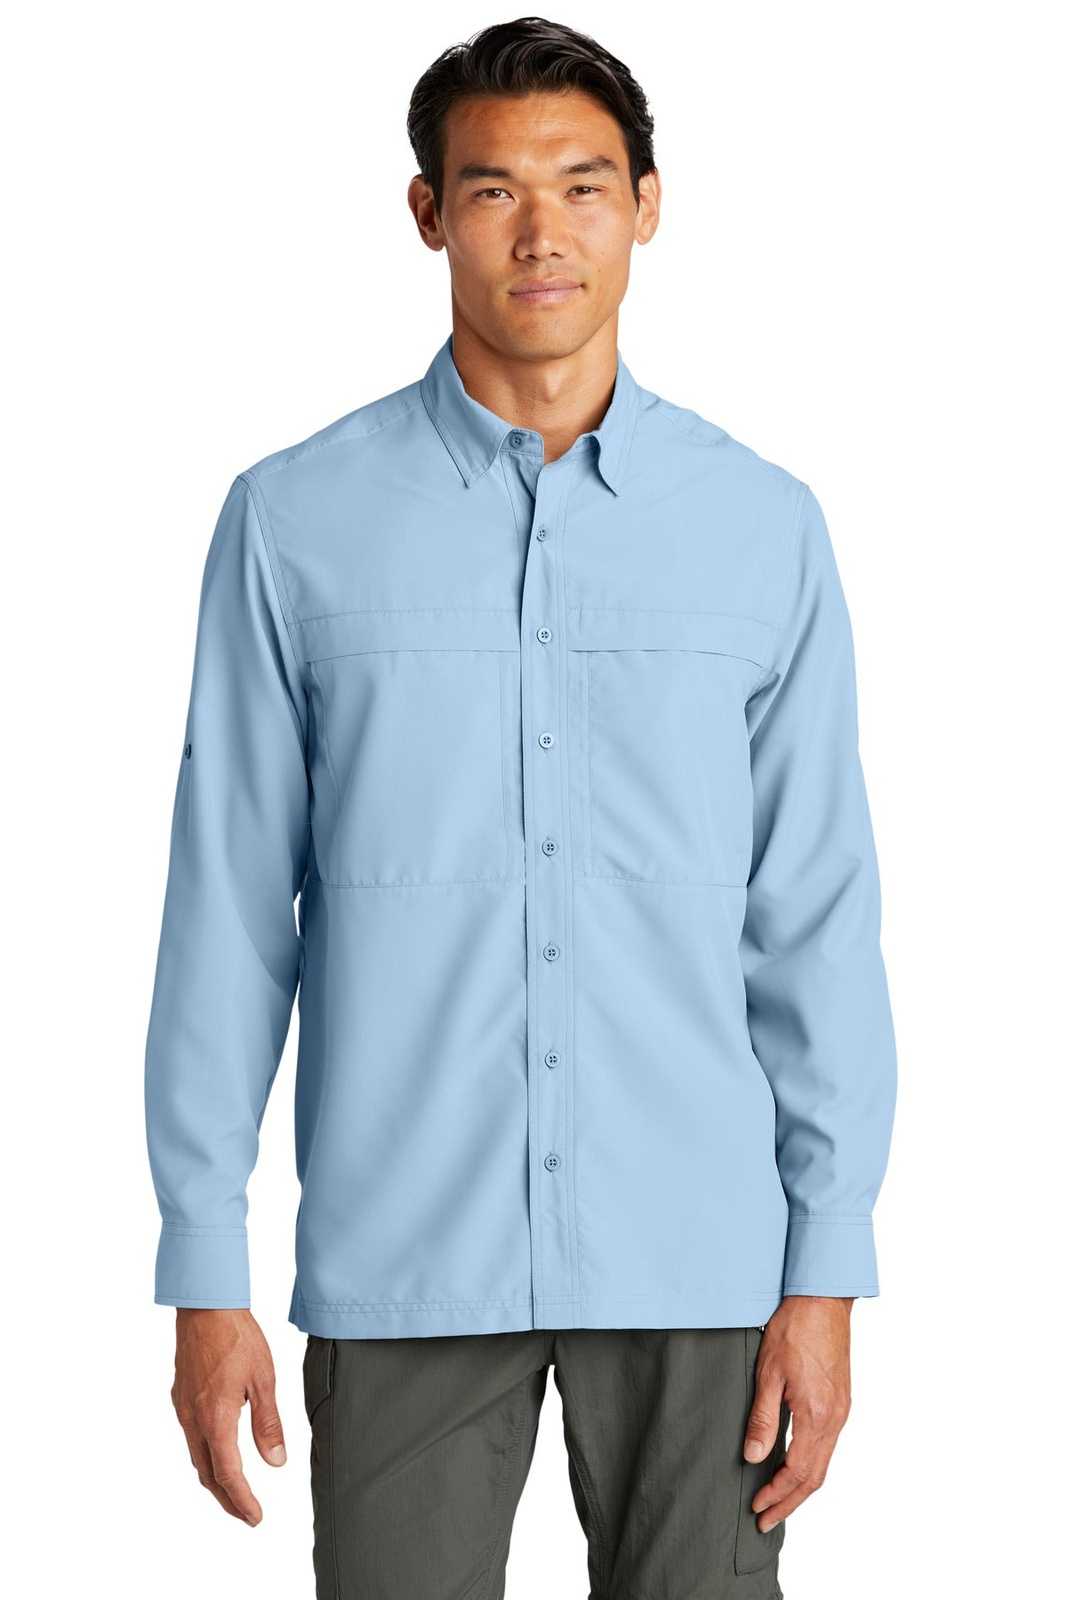 Port Authority W960 Long Sleeve UV Daybreak Shirt - Light Blue - HIT a Double - 1